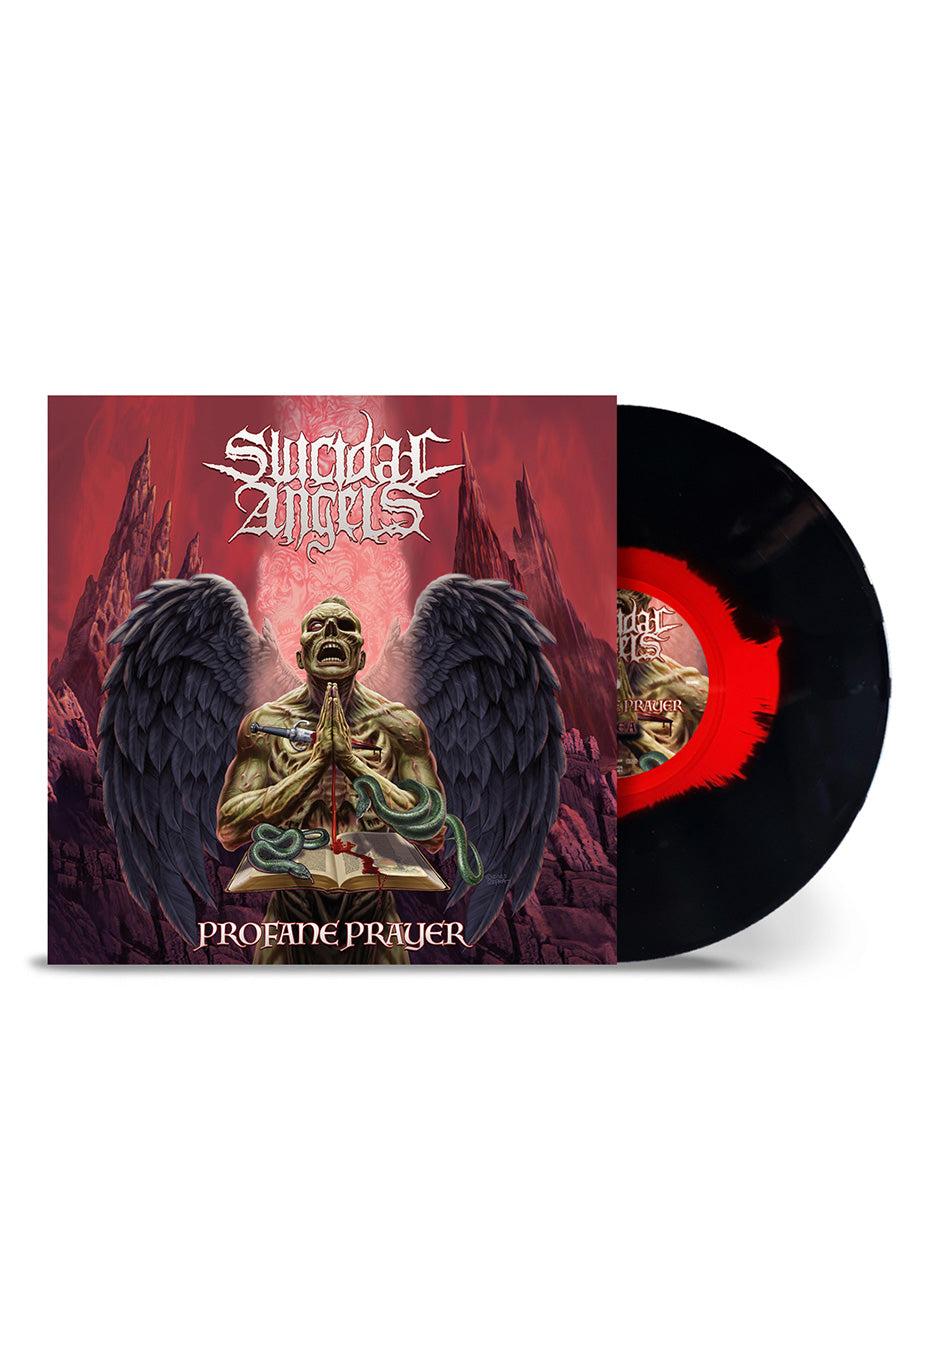 Suicidal Angels - Profane Prayer Ltd. Black Red Inkspot - Colored Vinyl